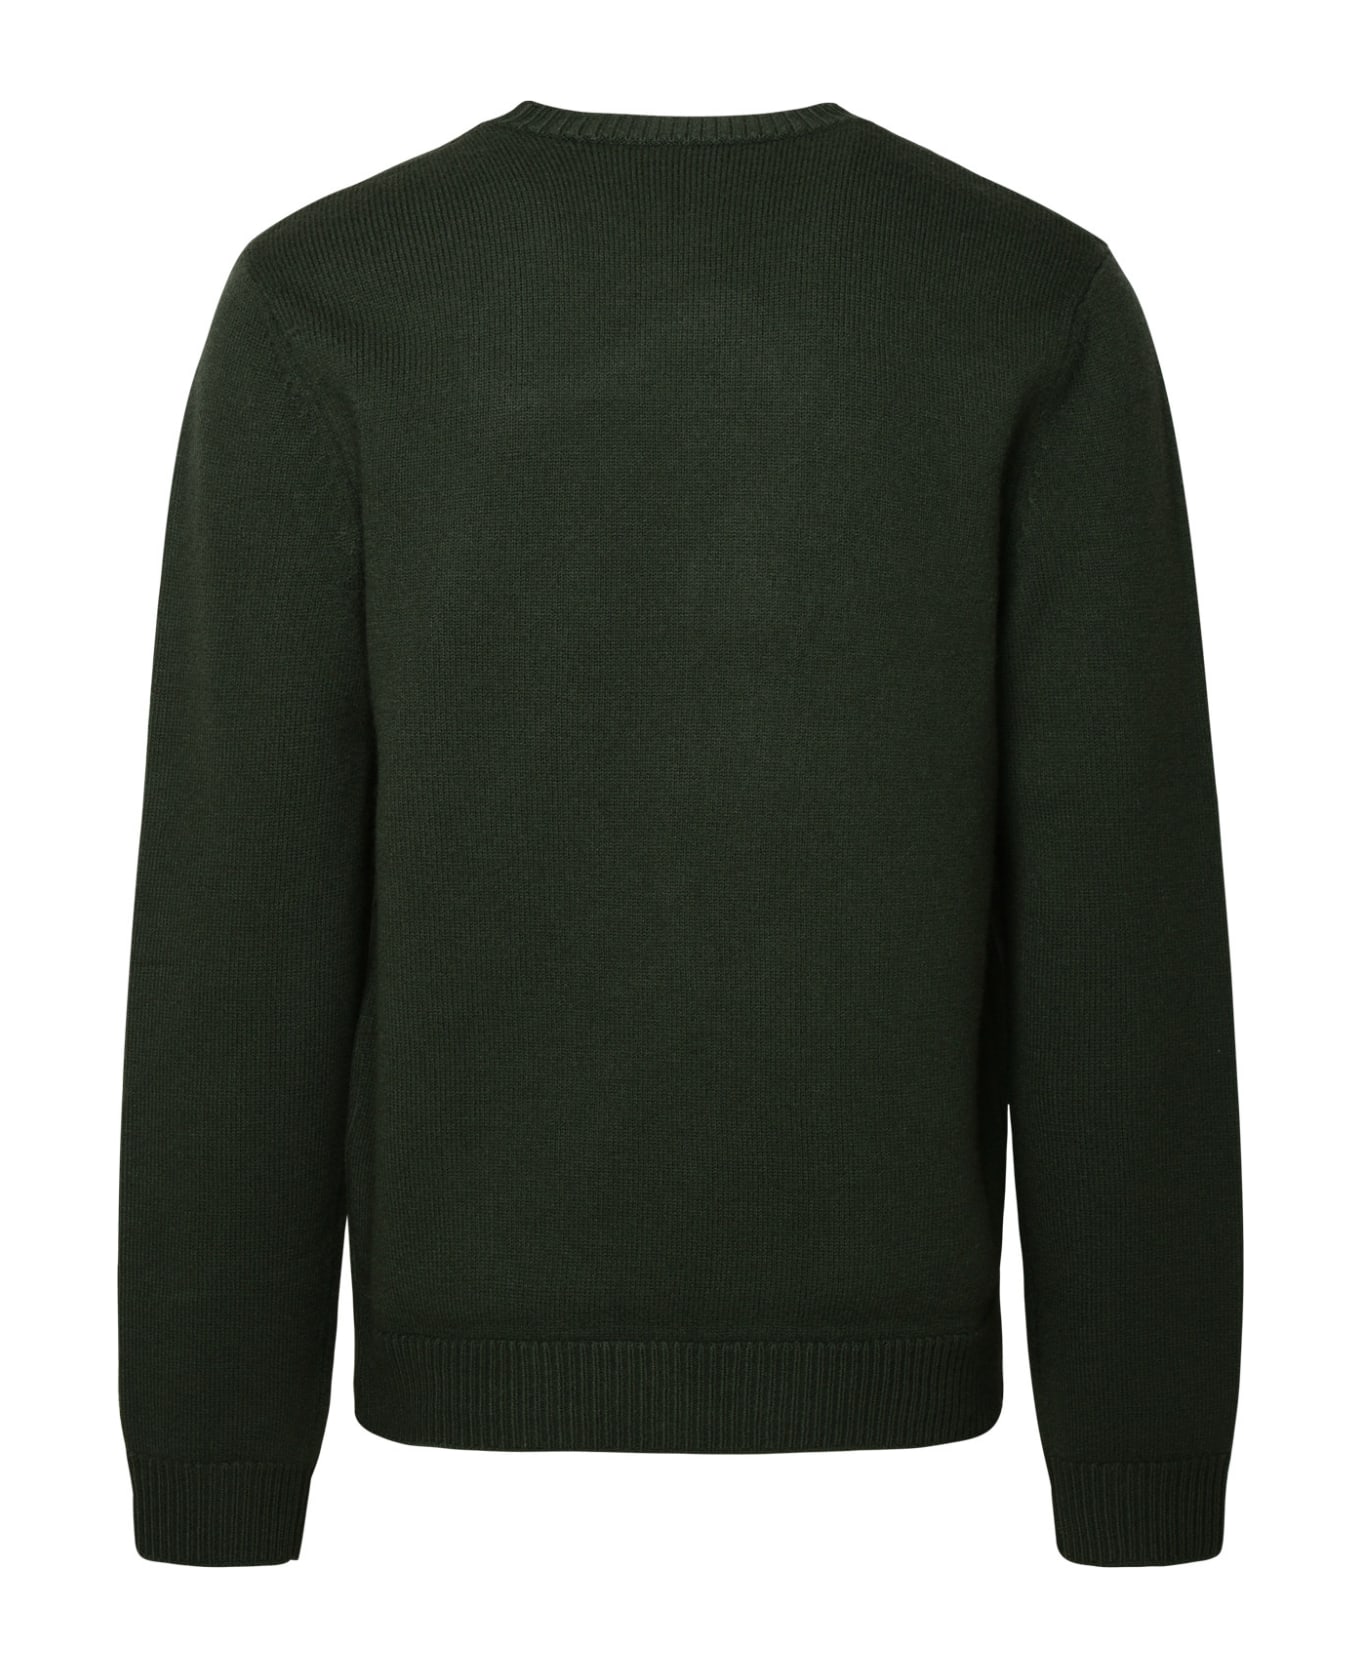 A.P.C. Edward Sweater In Green Wool - Green